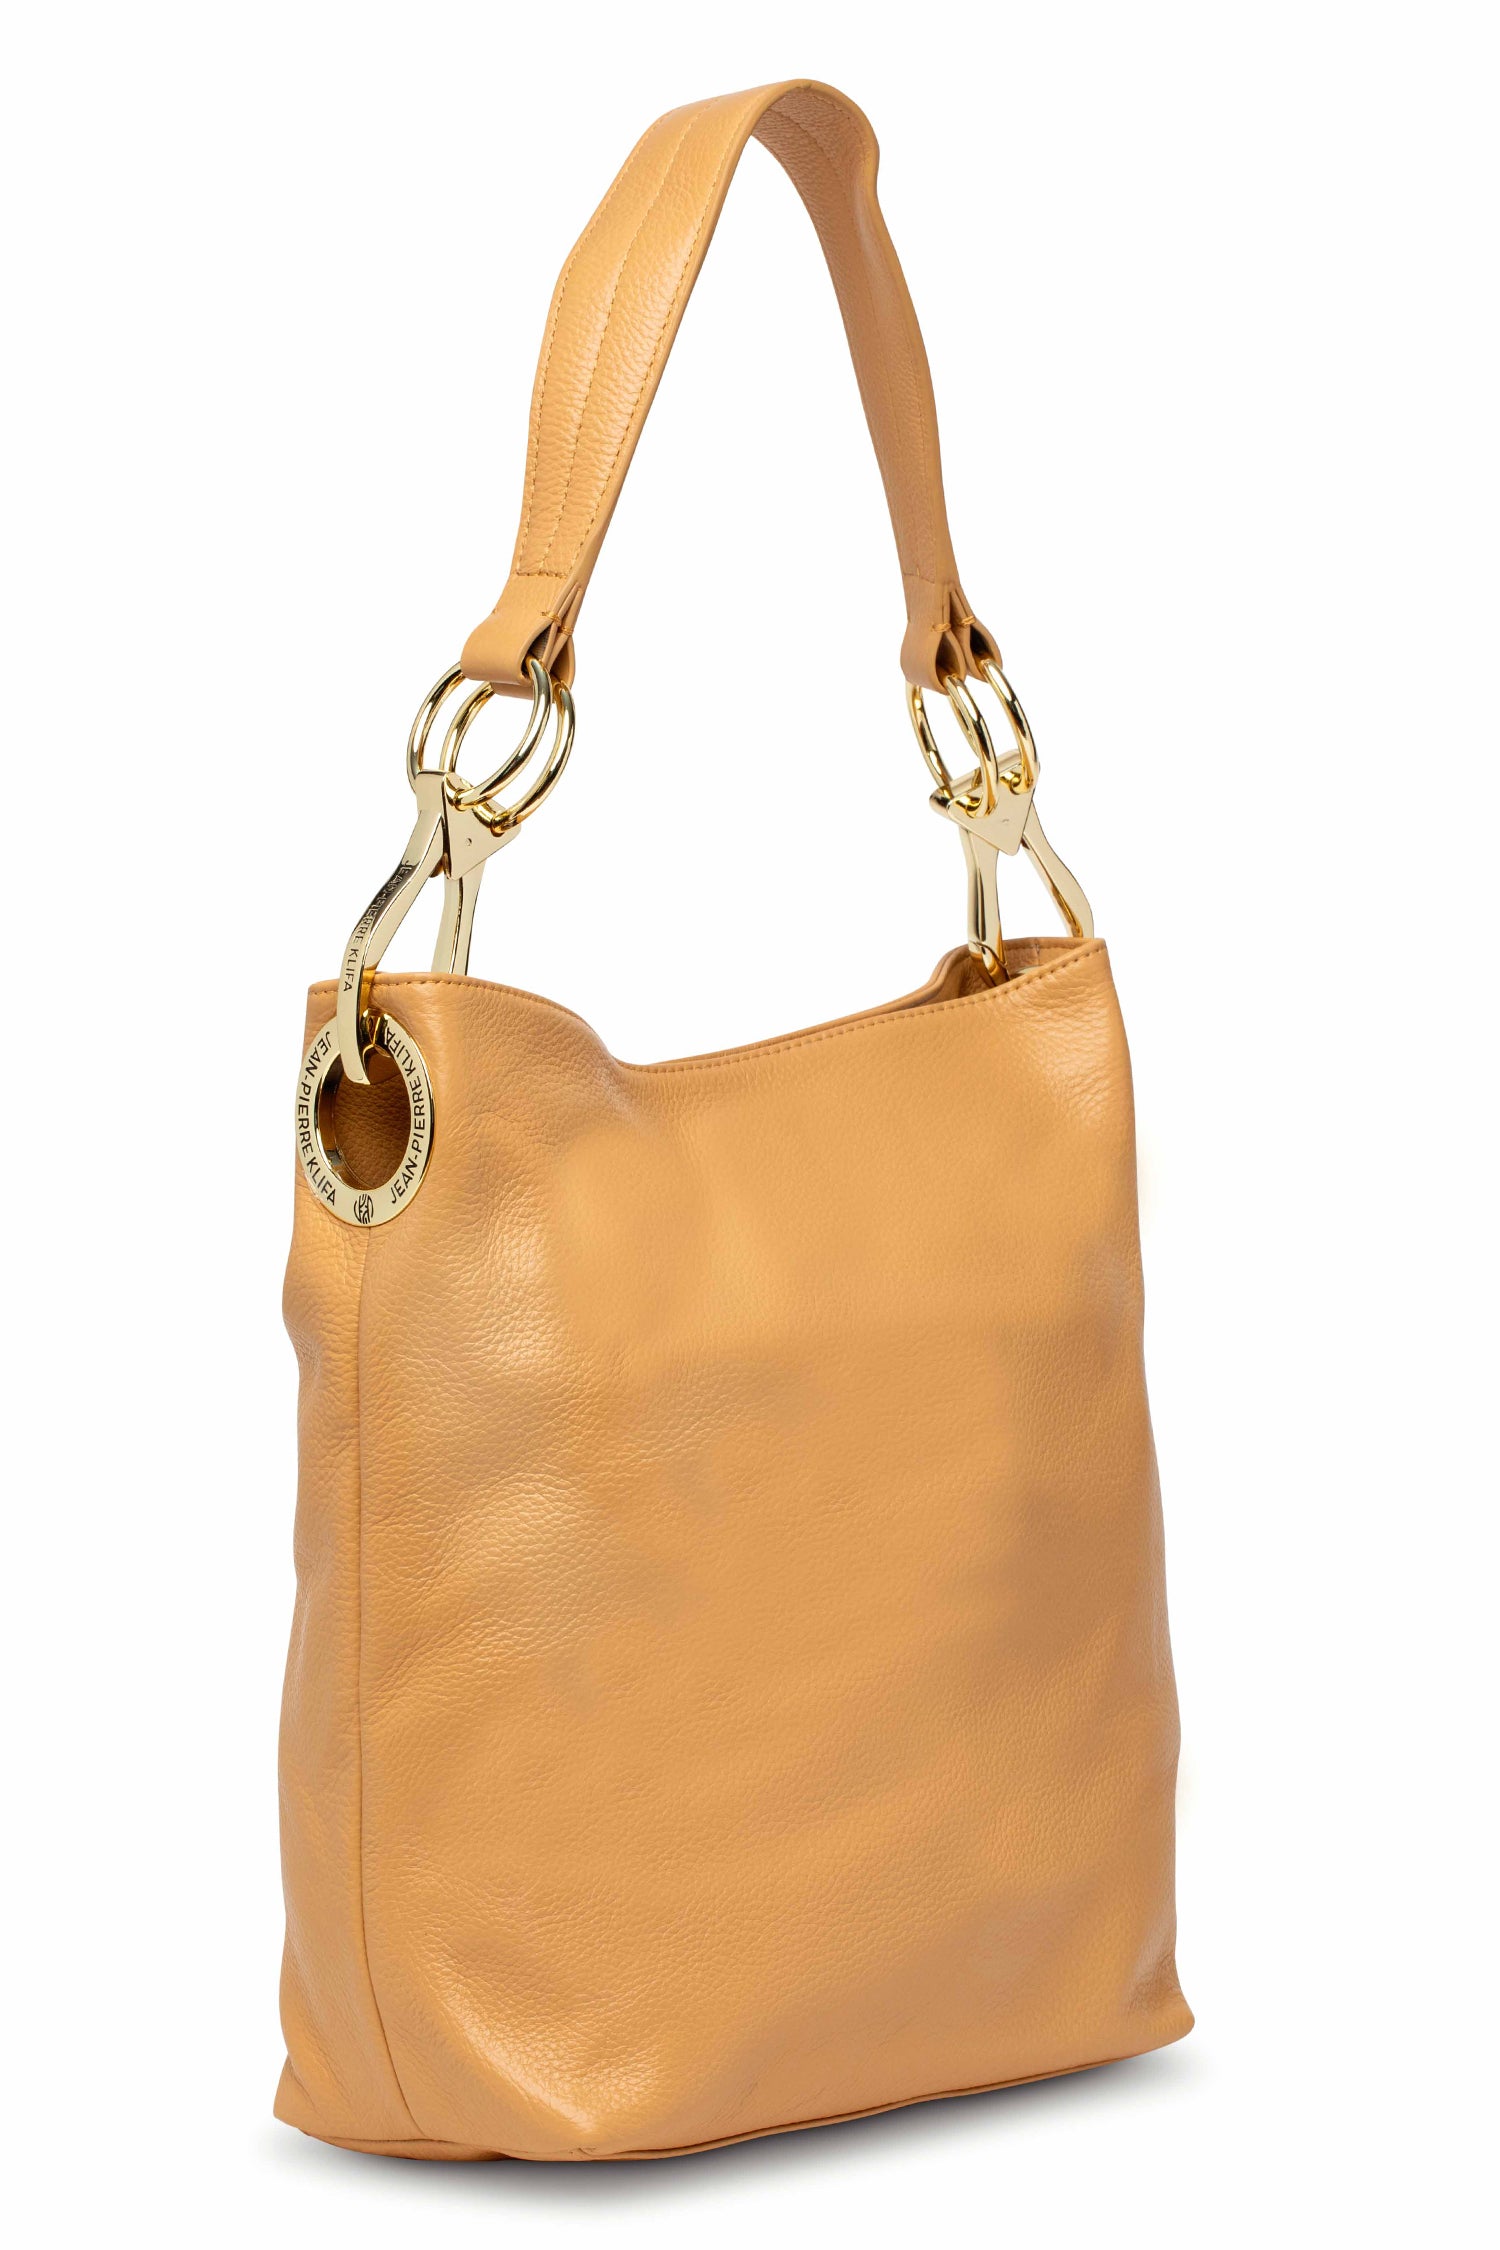 Leather Bucket Bag Camel Handbag Jean-Pierre Klifa   